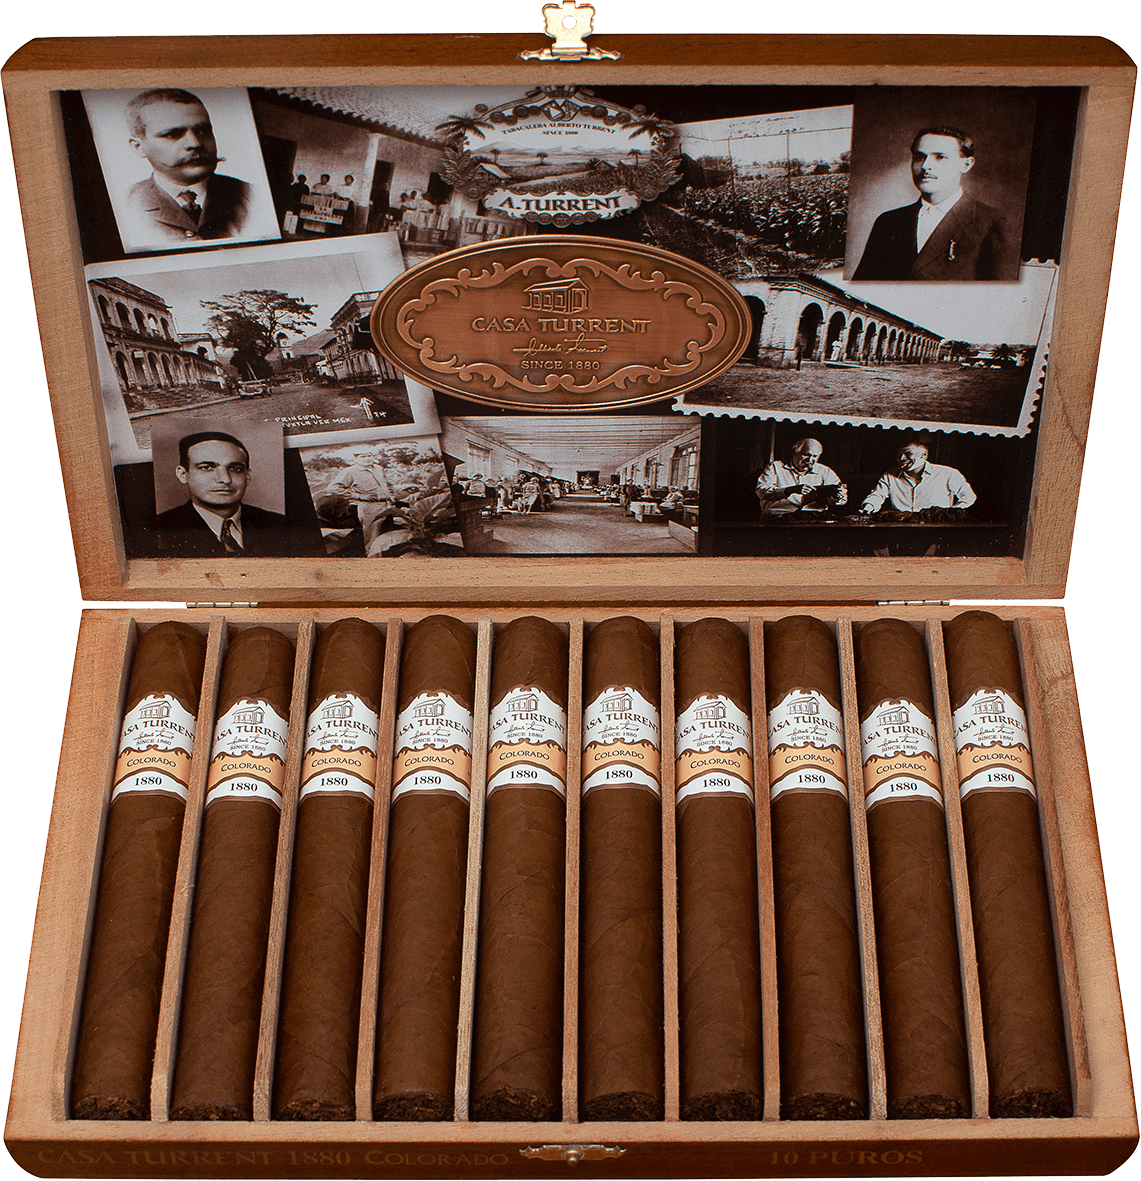 10er Kiste Casa Turrent 1880 Colorado Double Robusto Zigarren, Box geöffnet